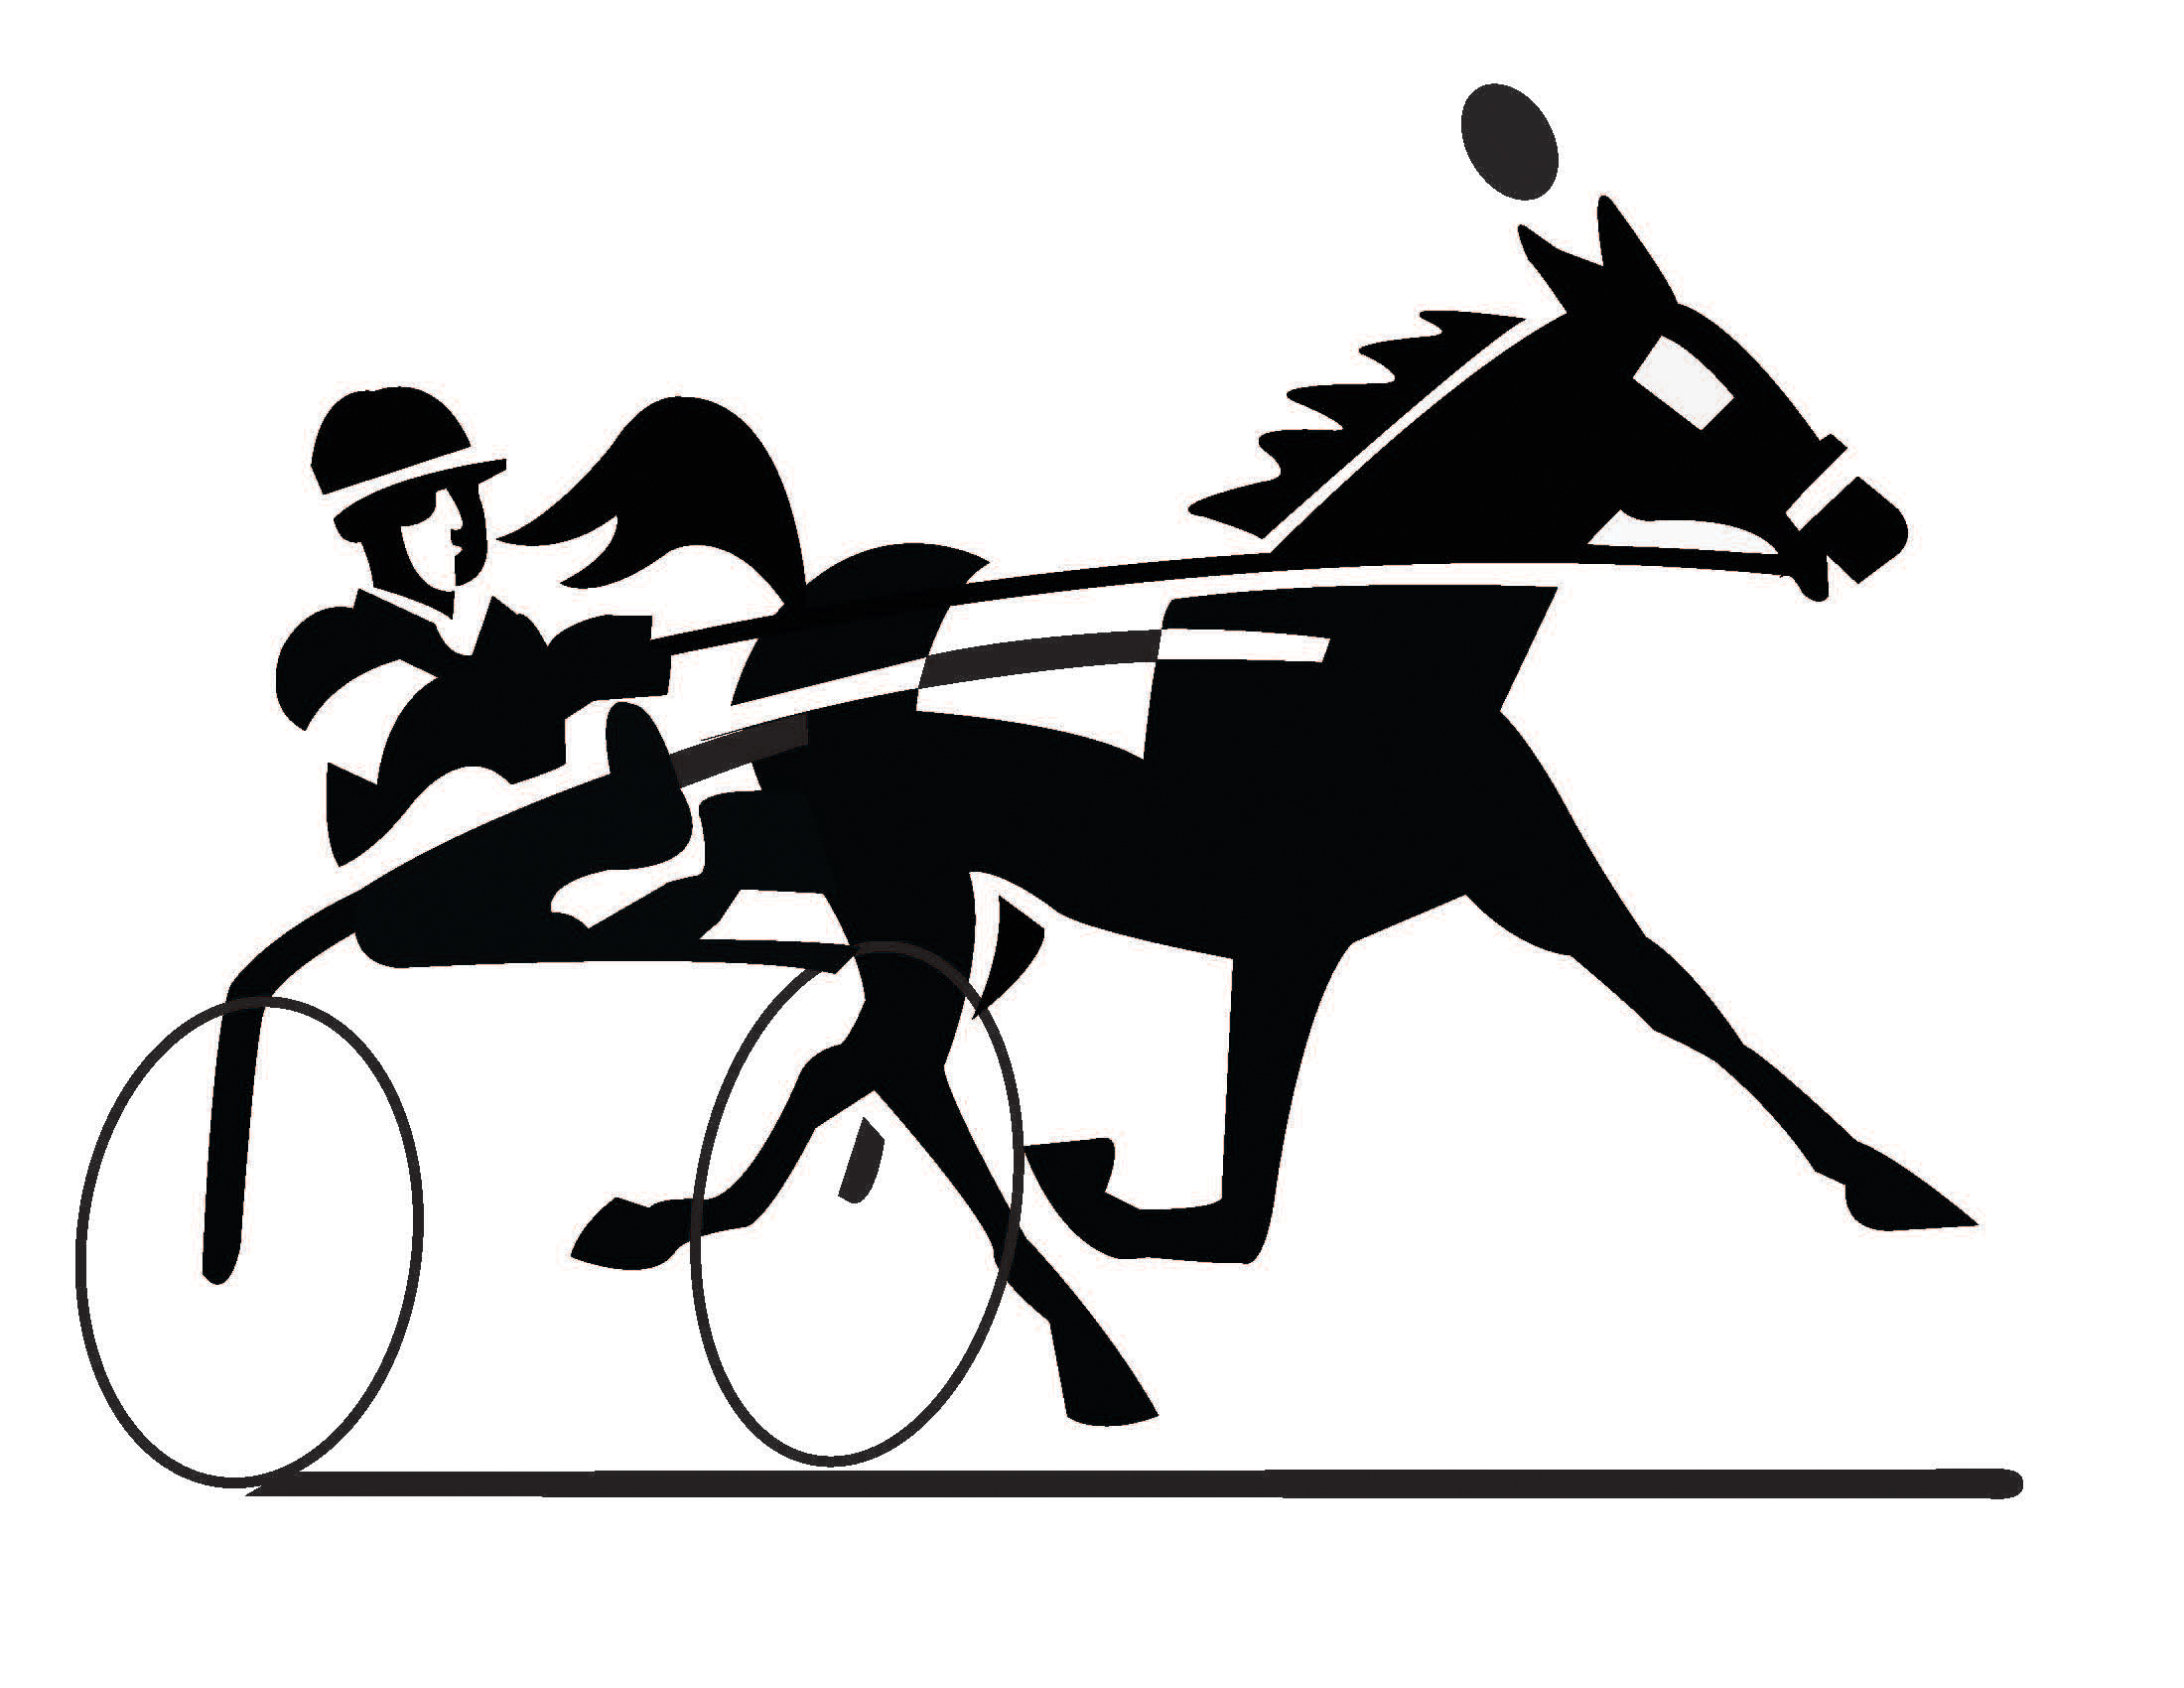 Horse racing racing clip art free image #30715